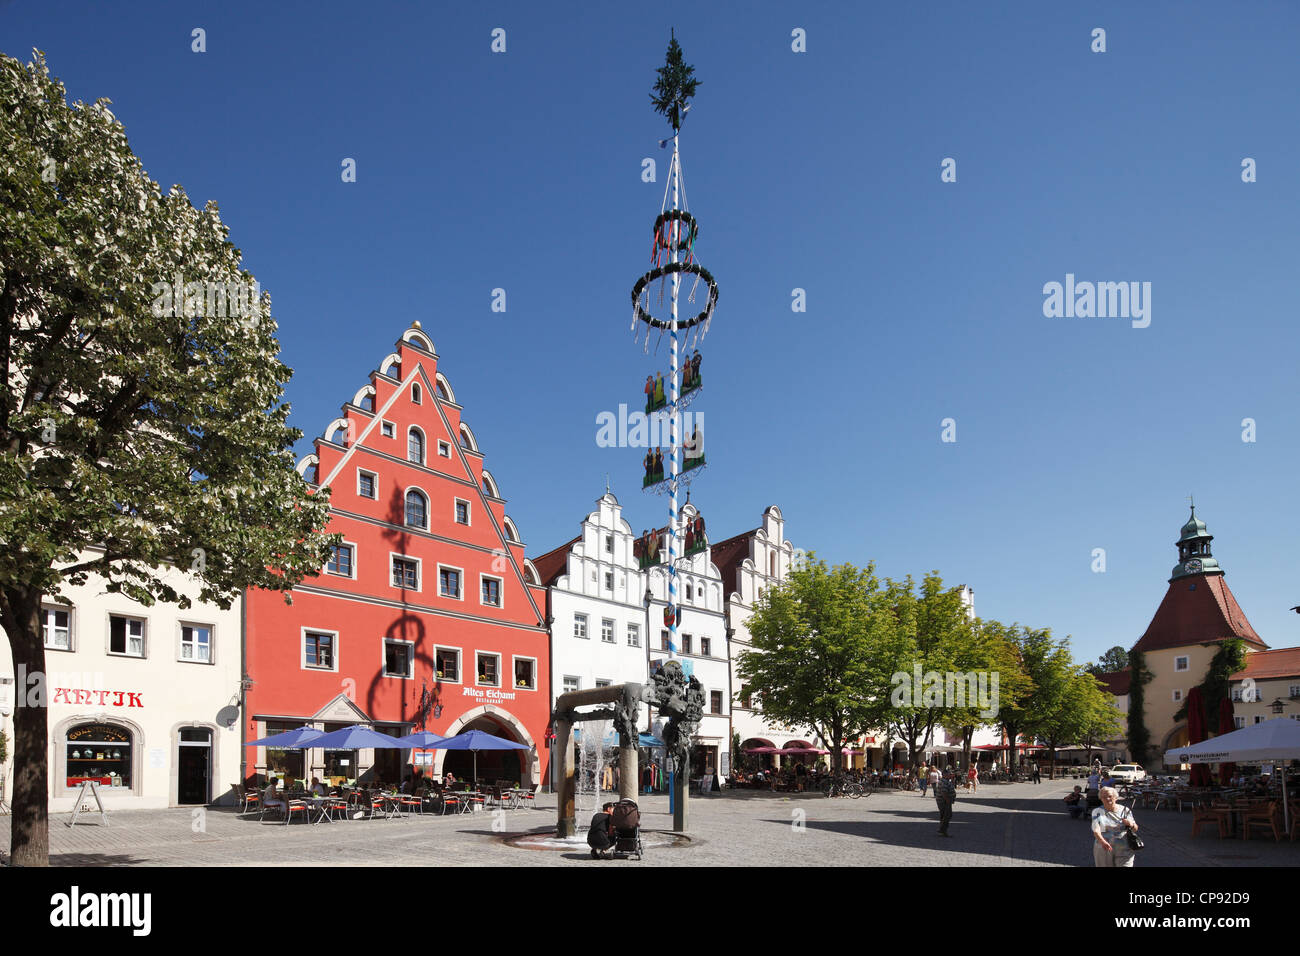 Germany, Bavaria, Weiden in der Oberpfalz, View of market square Stock Photo